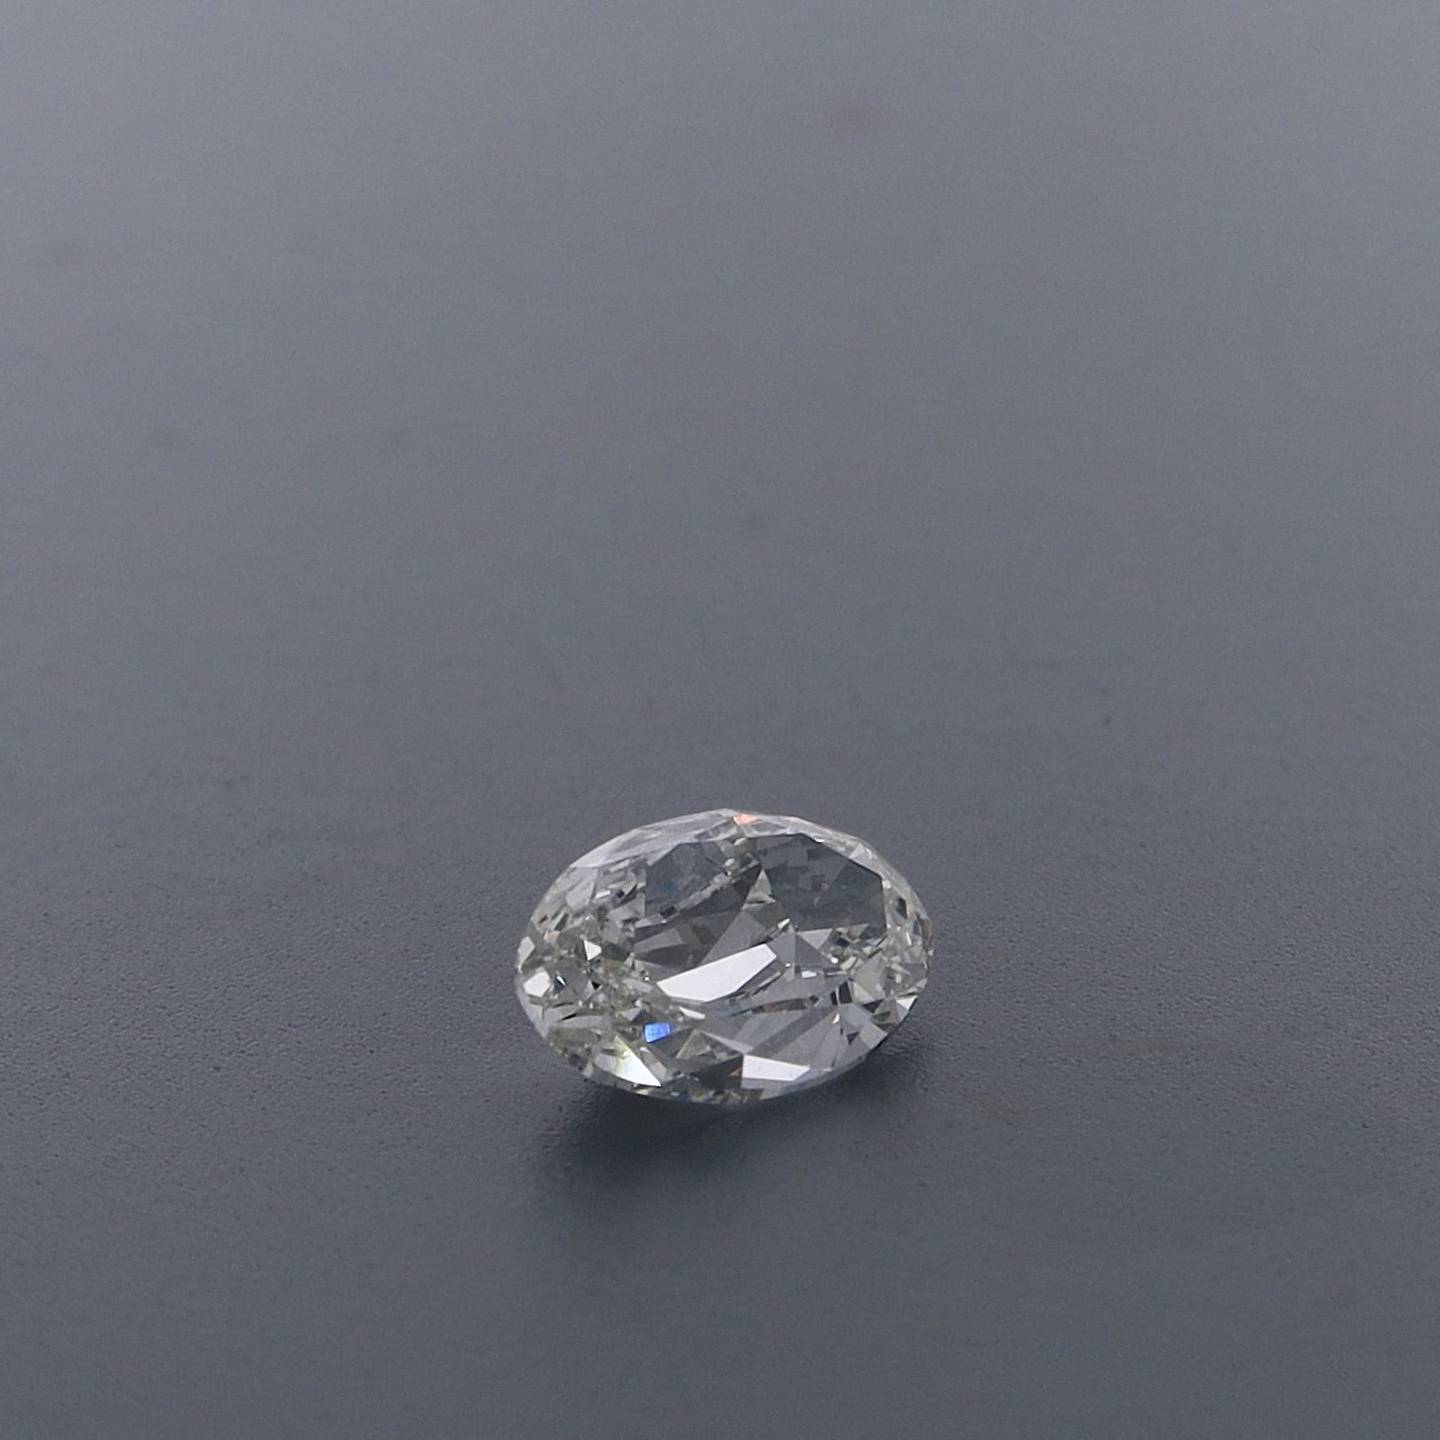 Oval 1.02ct IVVS1 Diamond